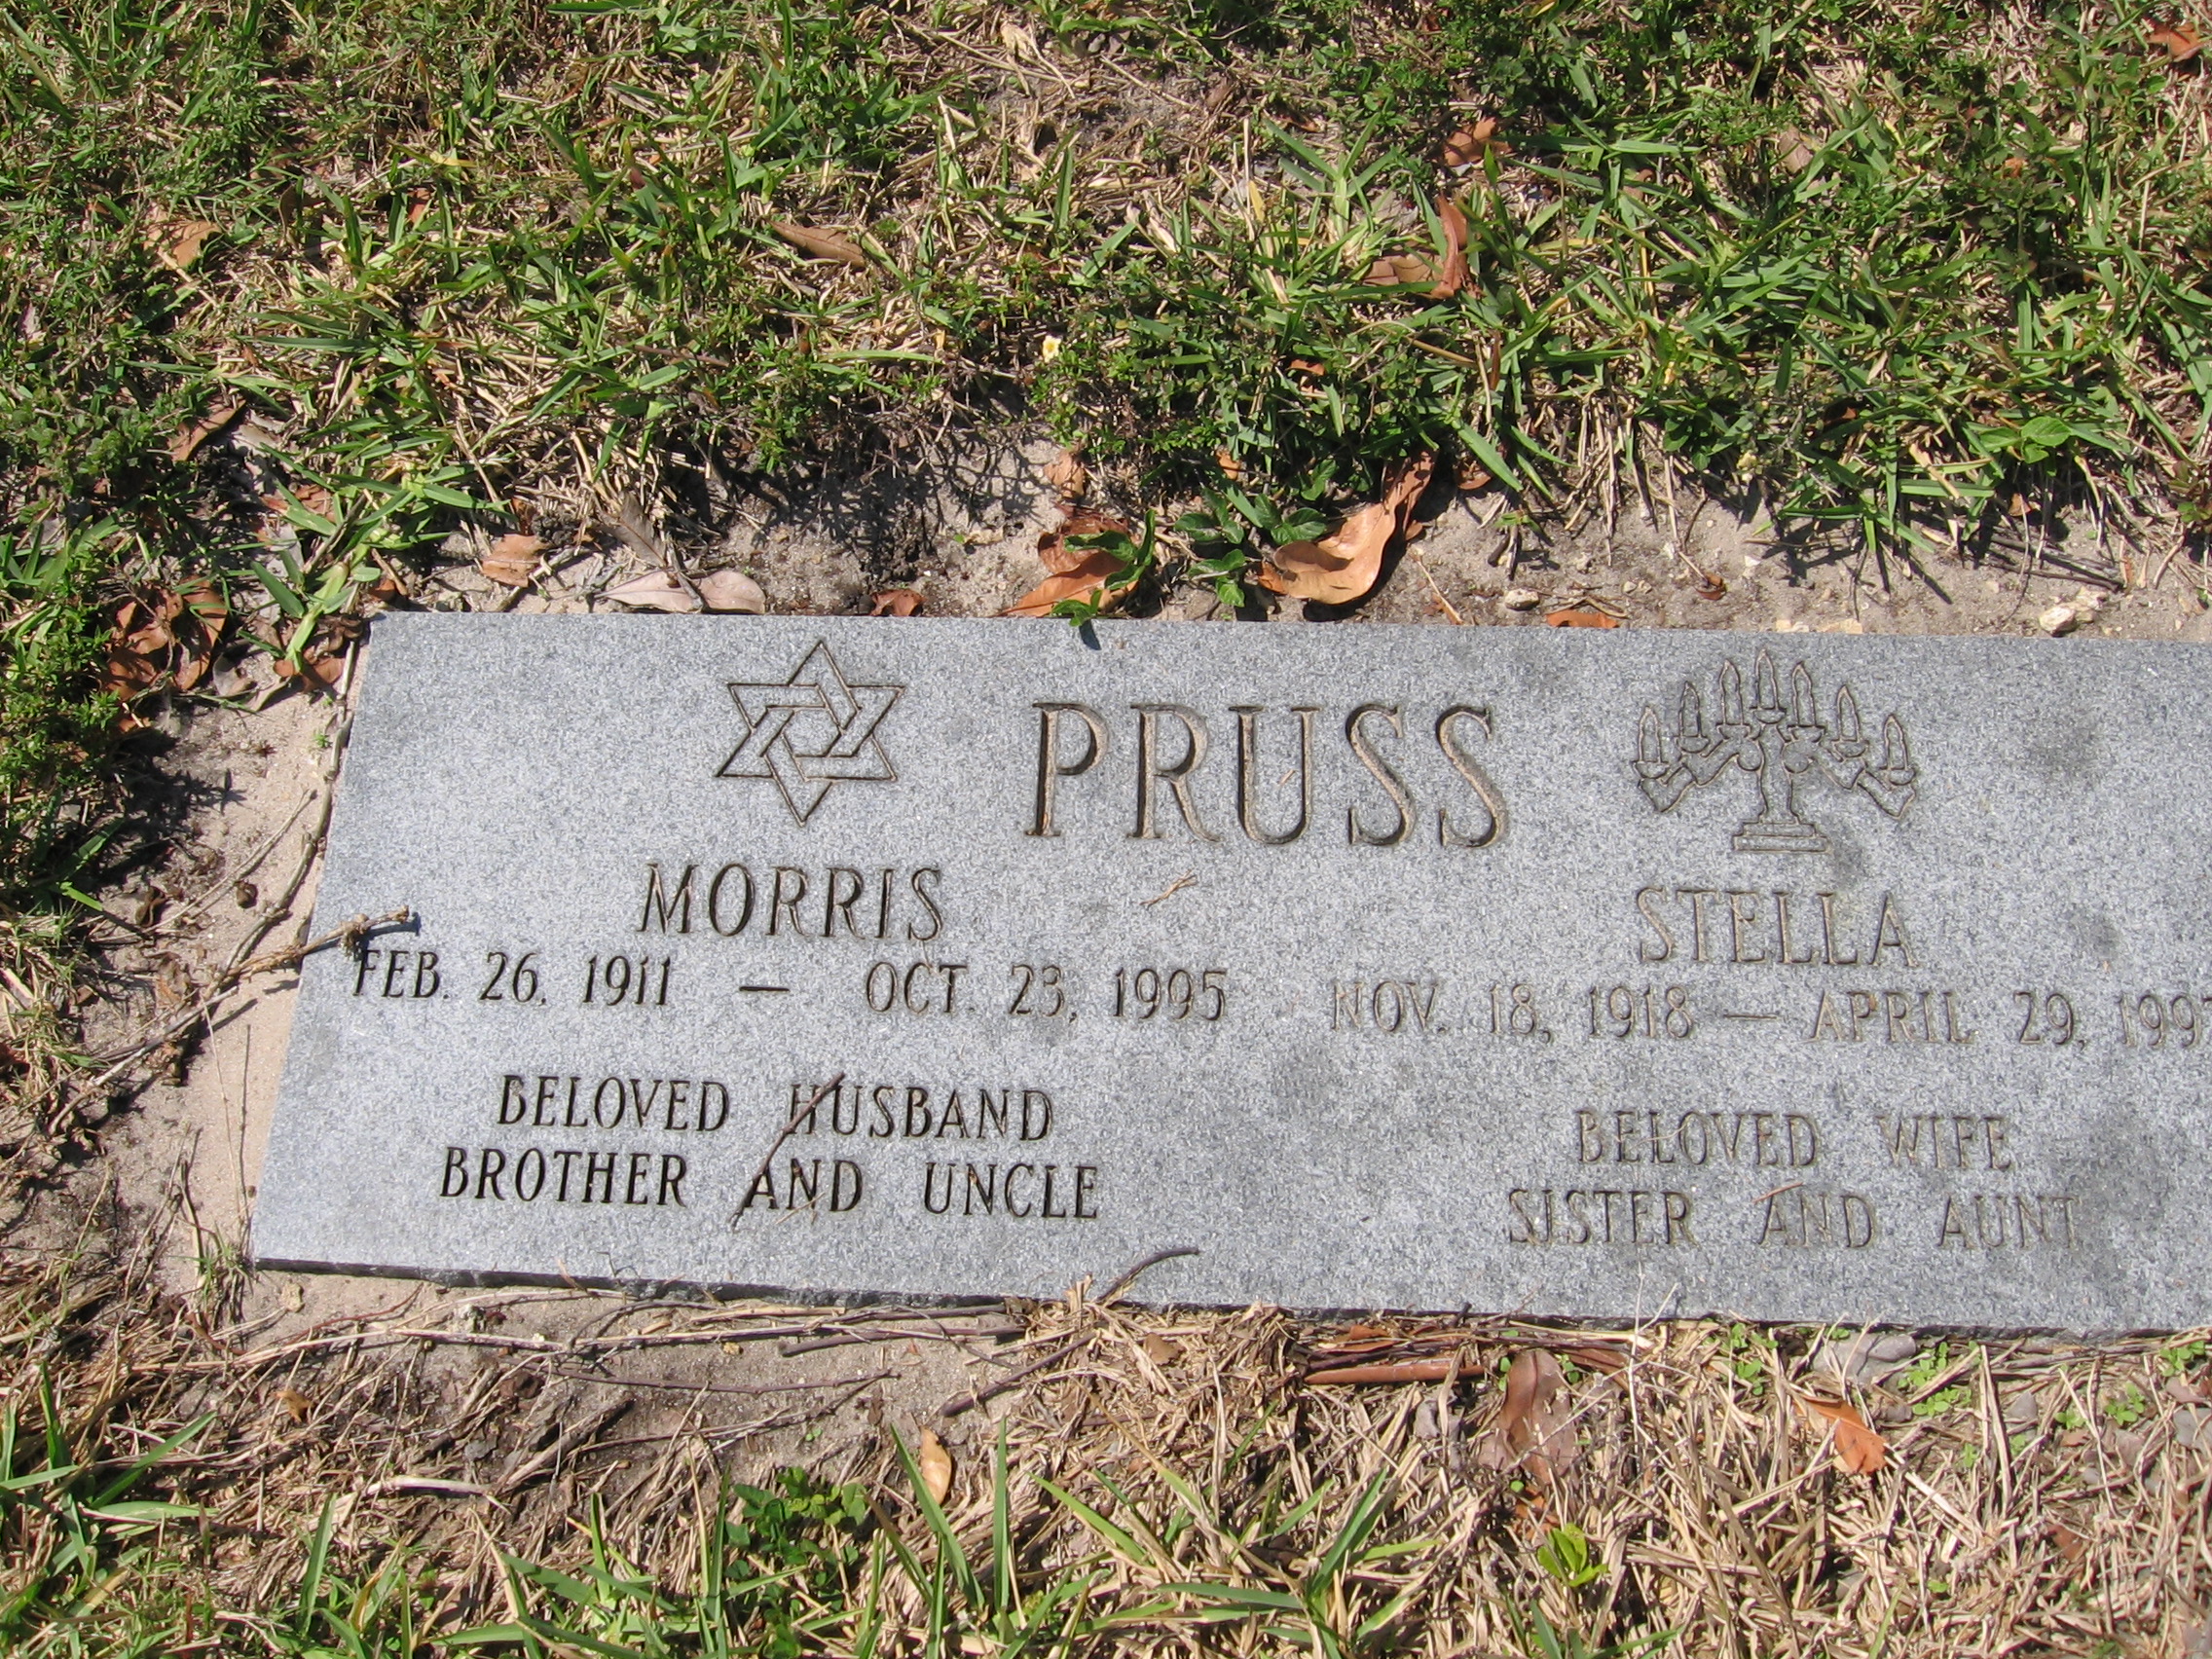 Morris Pruss